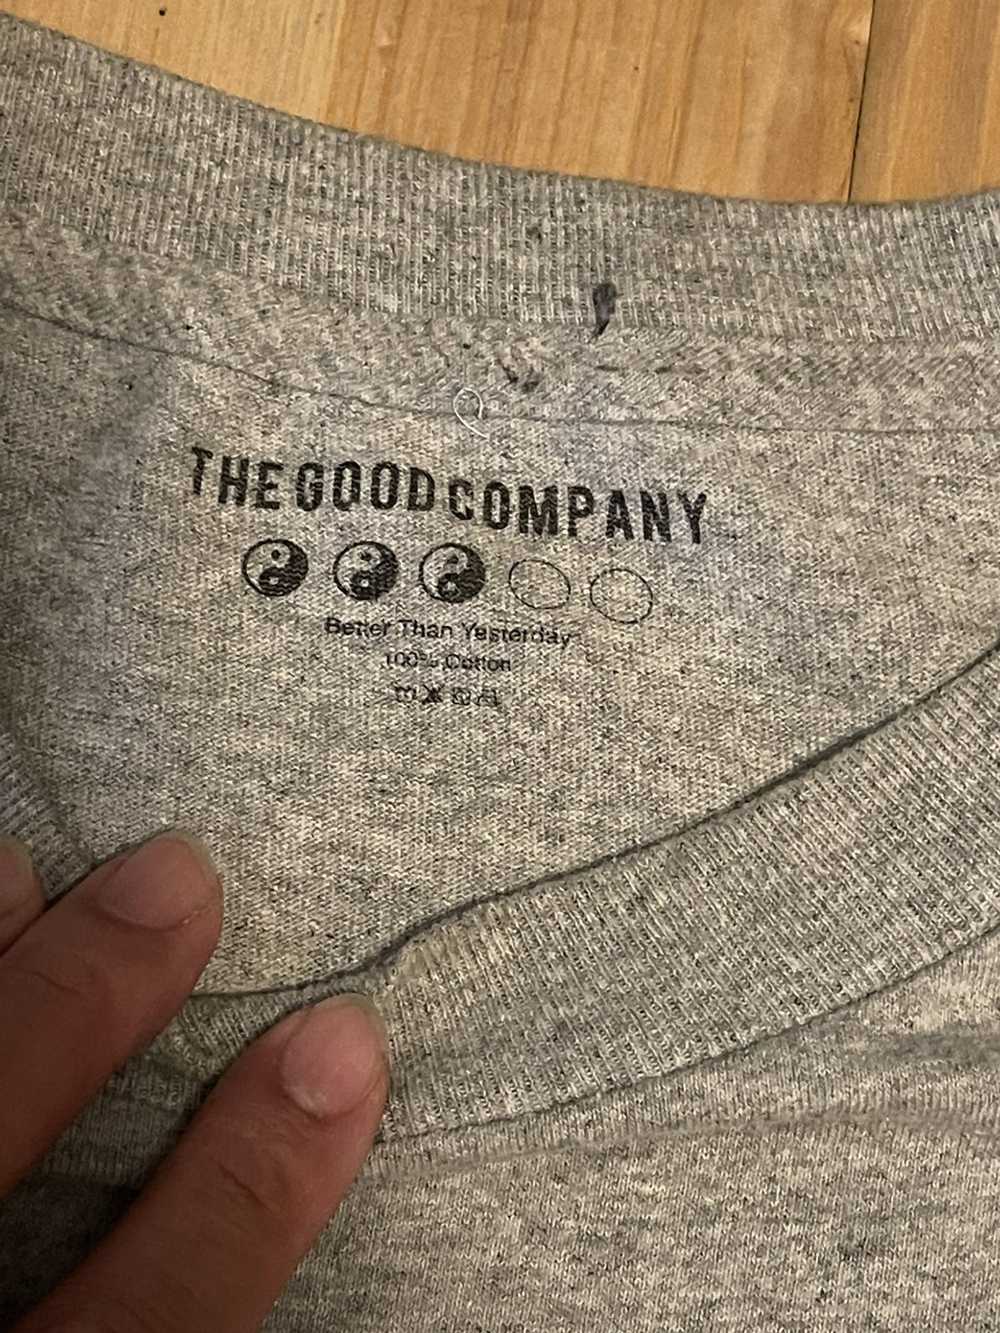 The Good Company The Good Company T-Shirt - image 3